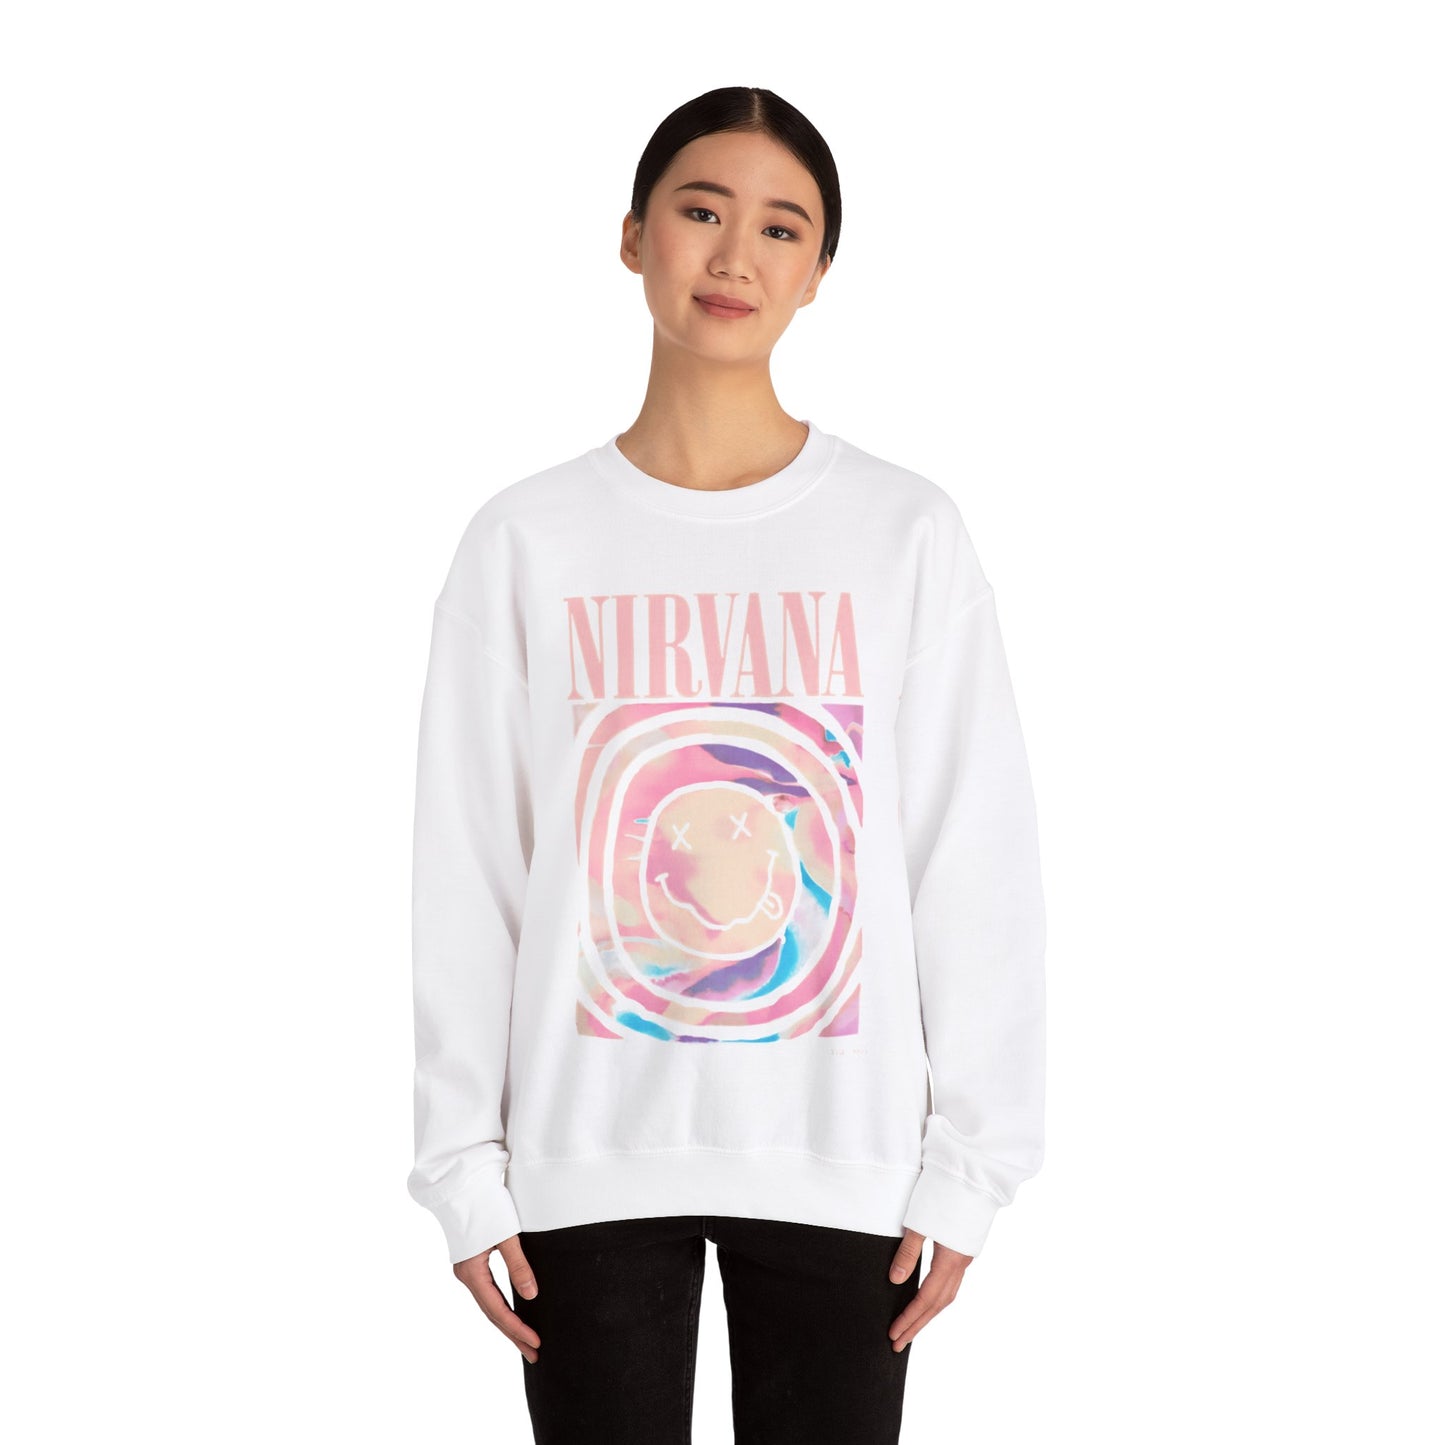 Nirvana-Inspired Unisex Heavy Blend Crewneck Sweatshirt: Comfort, Style, and Ethical Craftsmanship